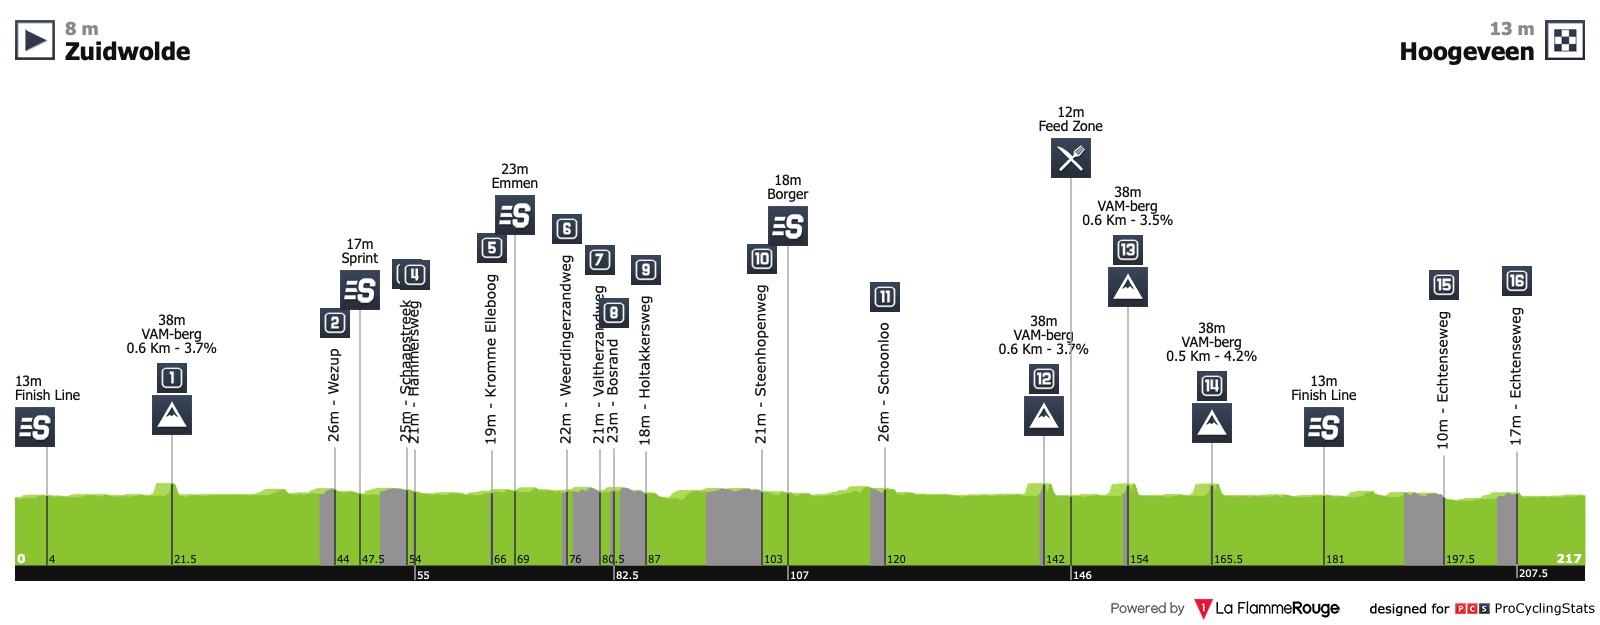 Ronde van Drenthe (1.3) : 17 mars Ronde-van-drenthe-2019-profile-25cc4f78e7